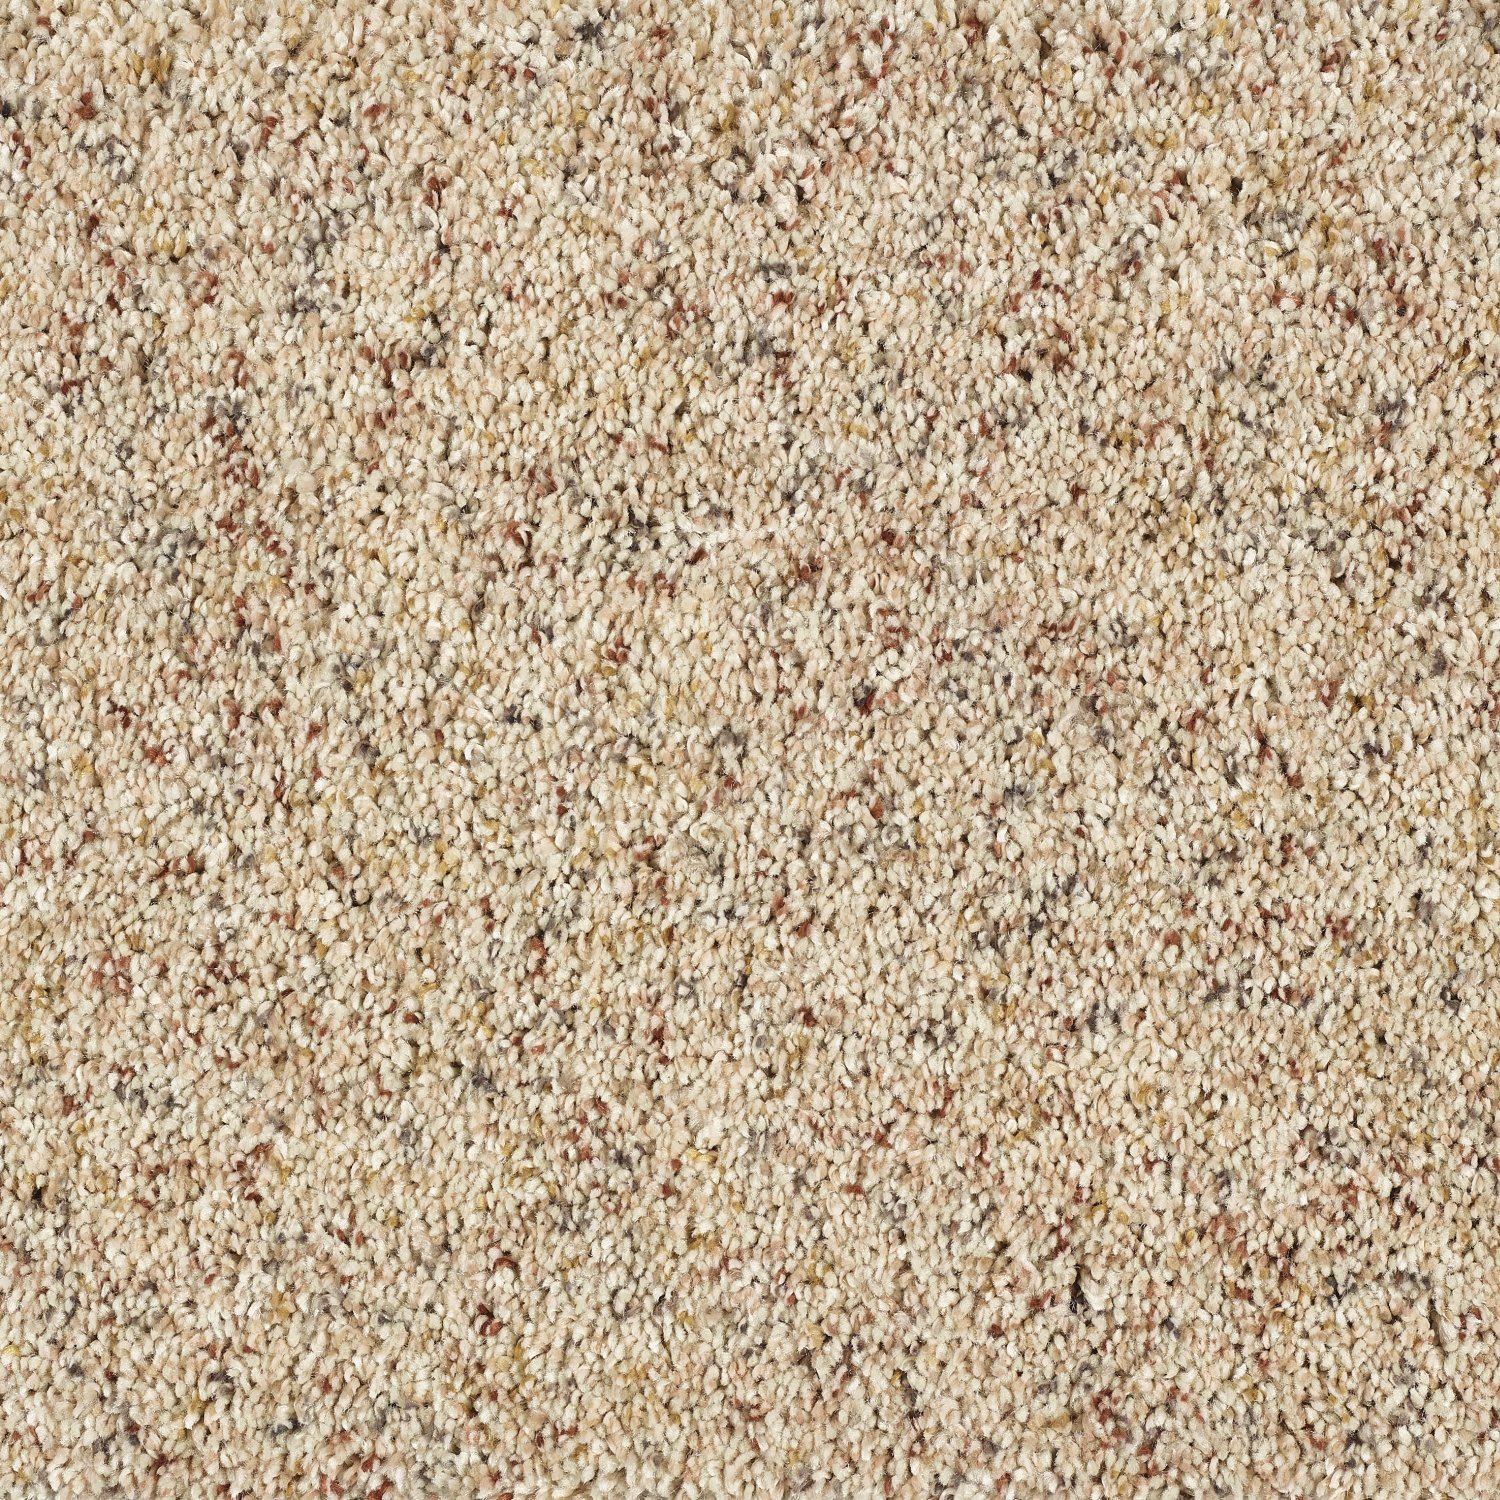 Wild Silk Super Soft Saxony Carpet - Pebble Beach